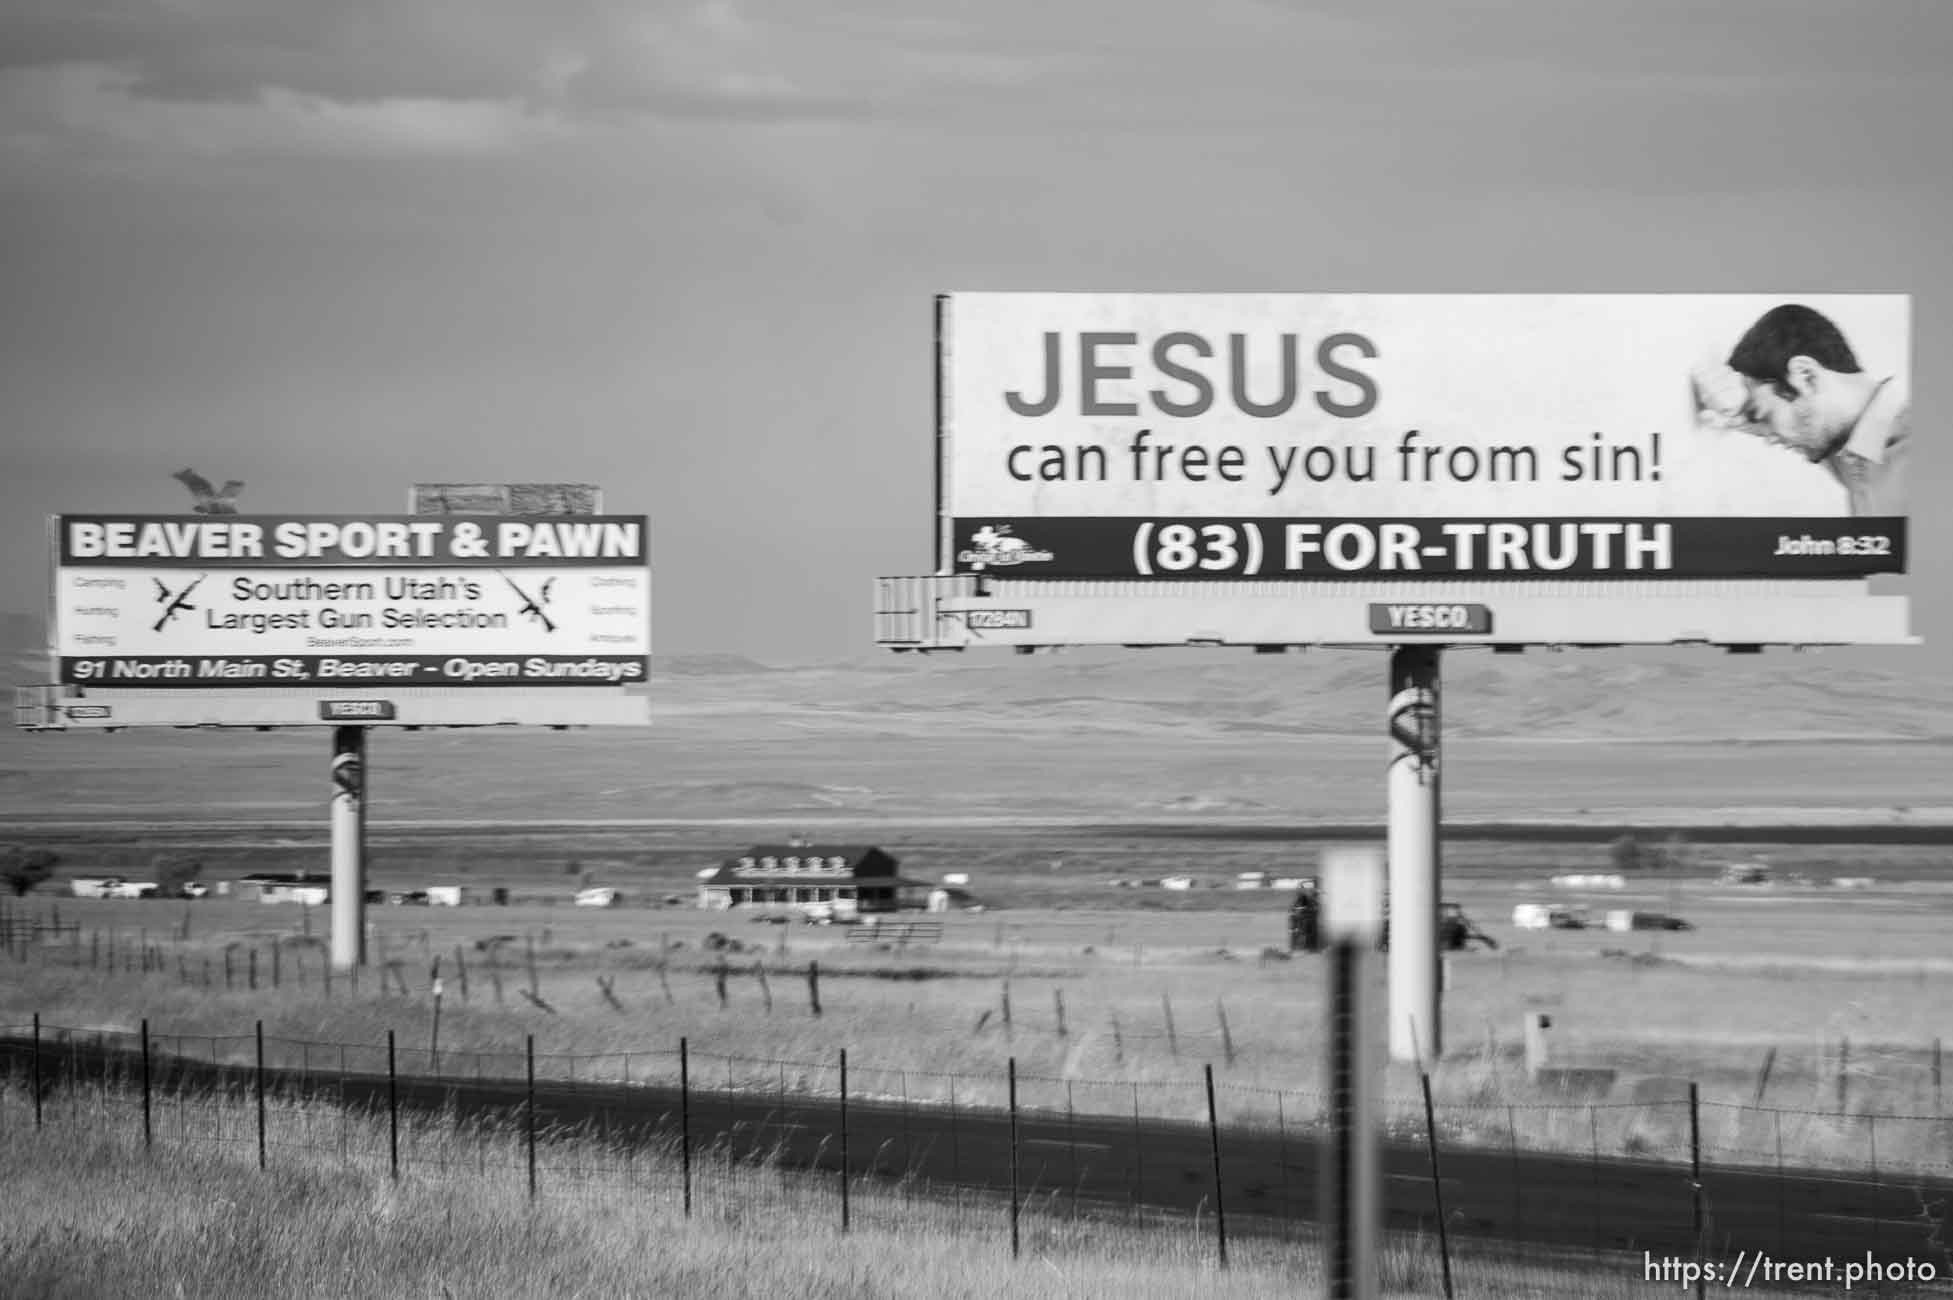 Guns, Jesus, Freedom, Sin